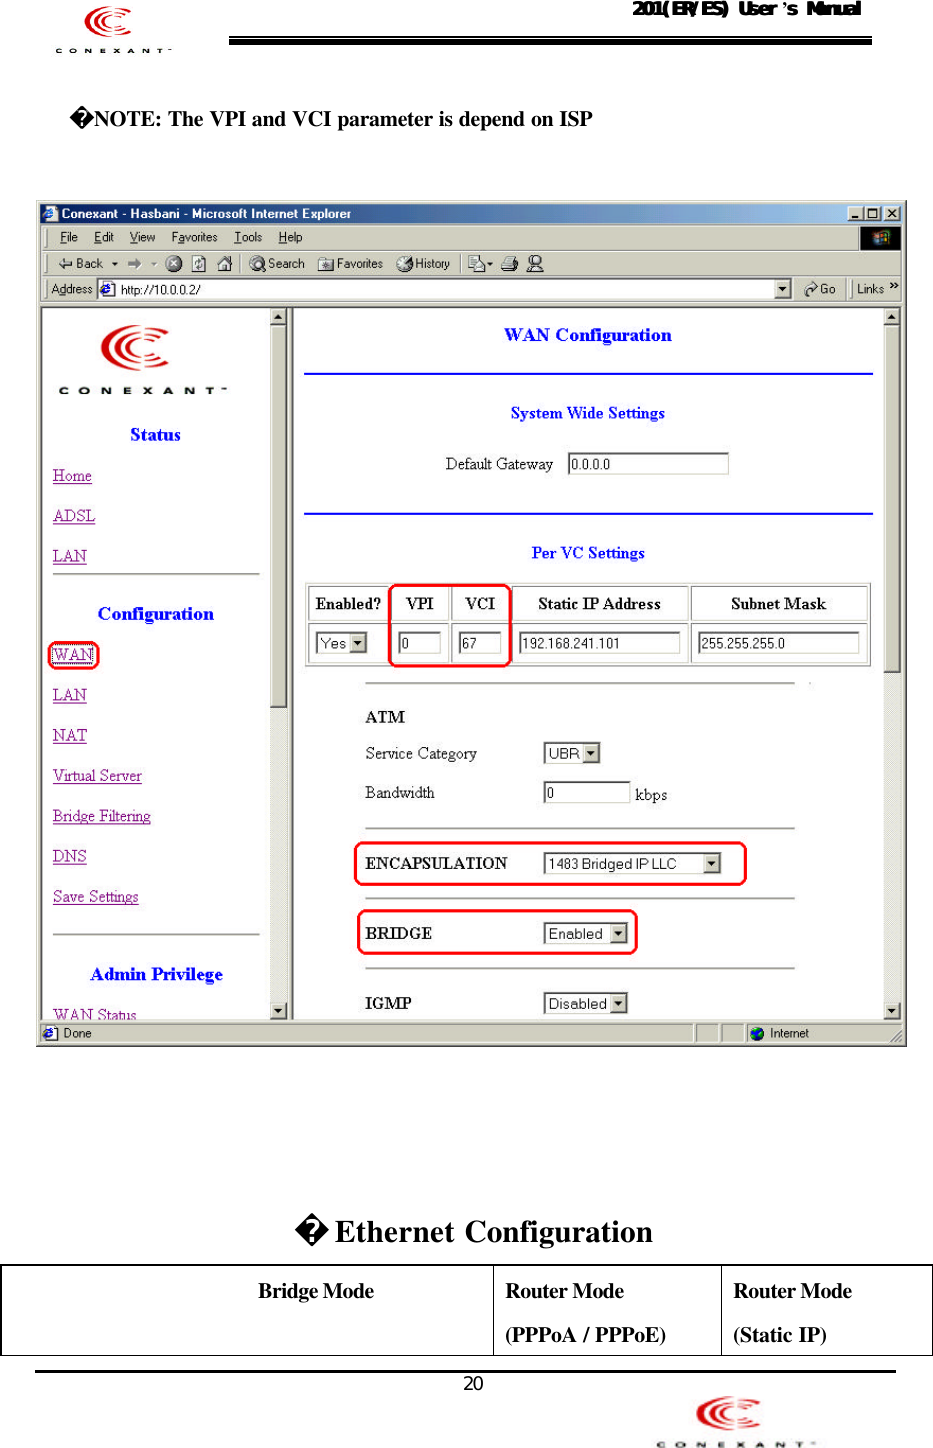                                                                                                                                                20201(ER/ES) User201(ER/ES) User ’s Manuals Manual         NOTE: The VPI and VCI parameter is depend on ISP       Ethernet Configuration  Bridge Mode  Router Mode  (PPPoA / PPPoE) Router Mode  (Static IP) 